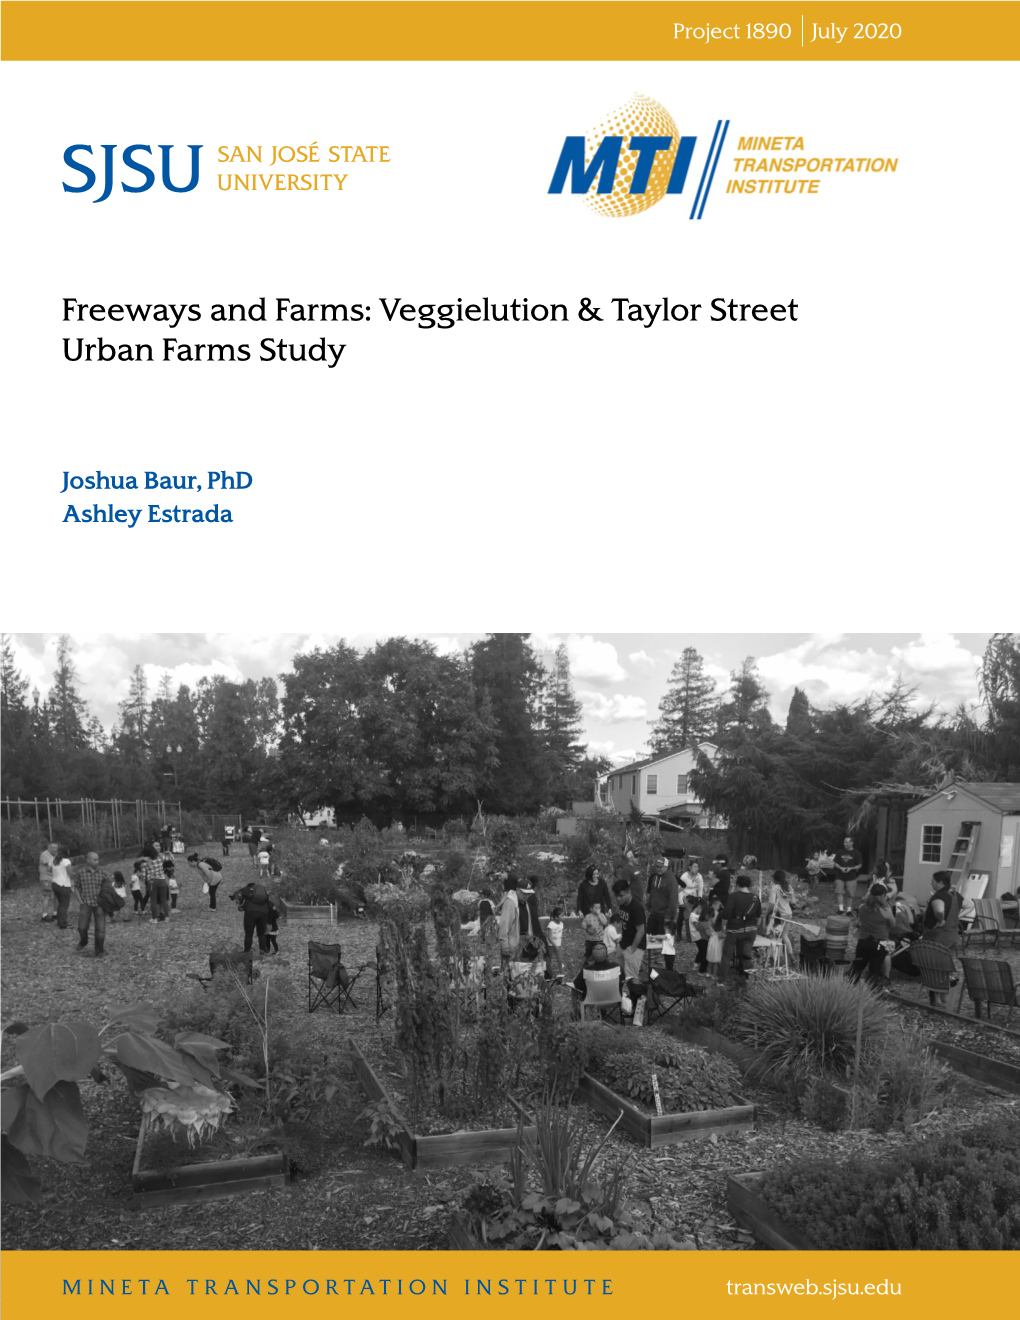 Freeways and Farms: Veggielution & Taylor Street Urban Farms Study